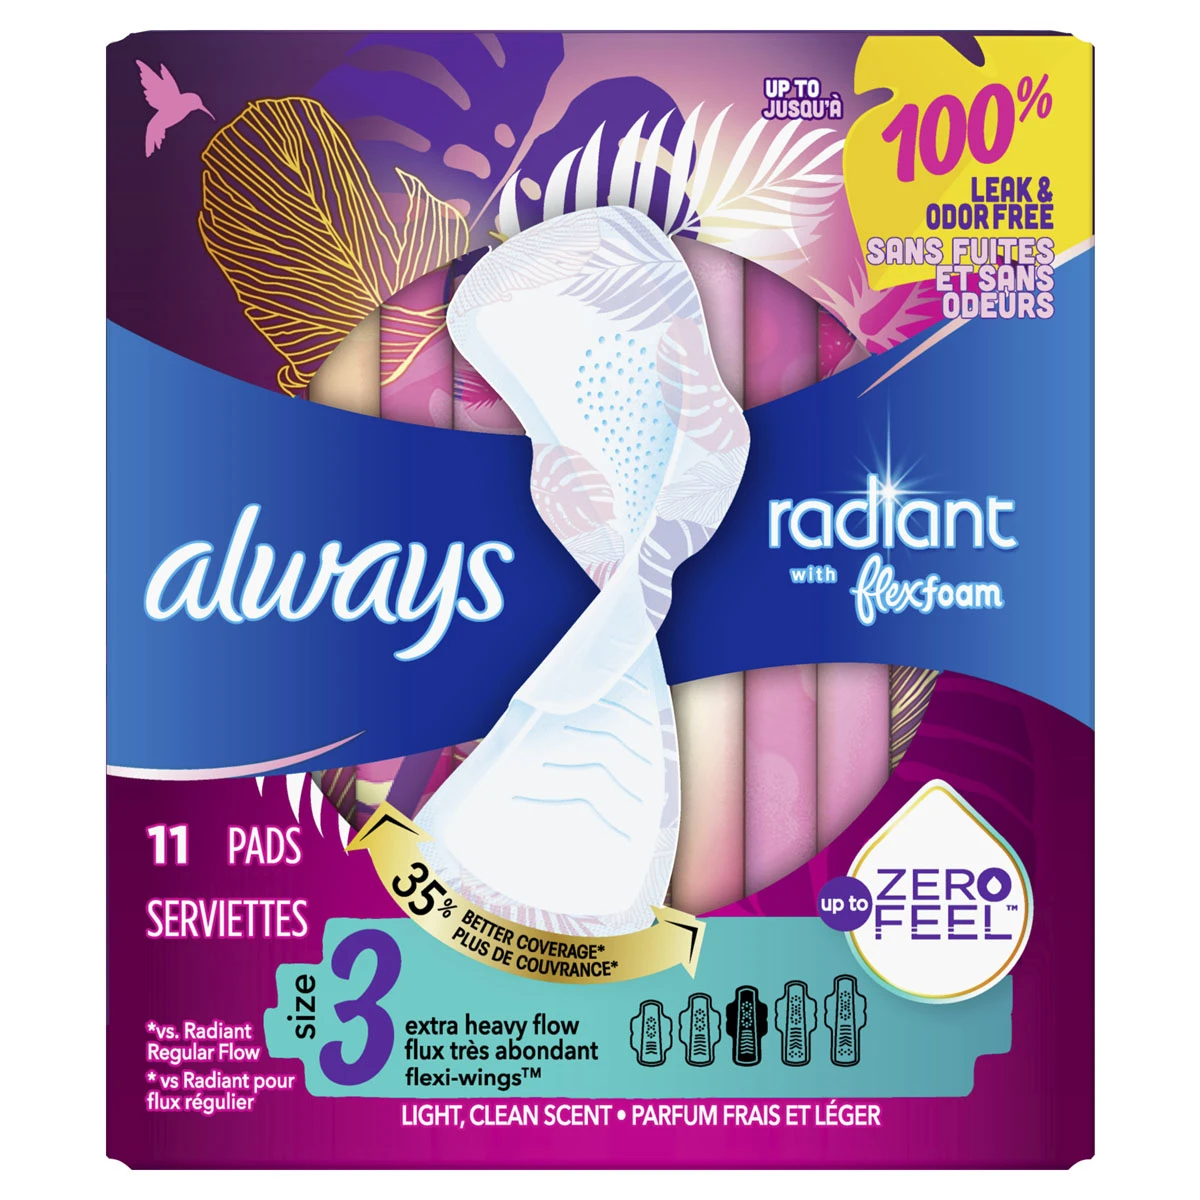 4 always radiant teen pads new